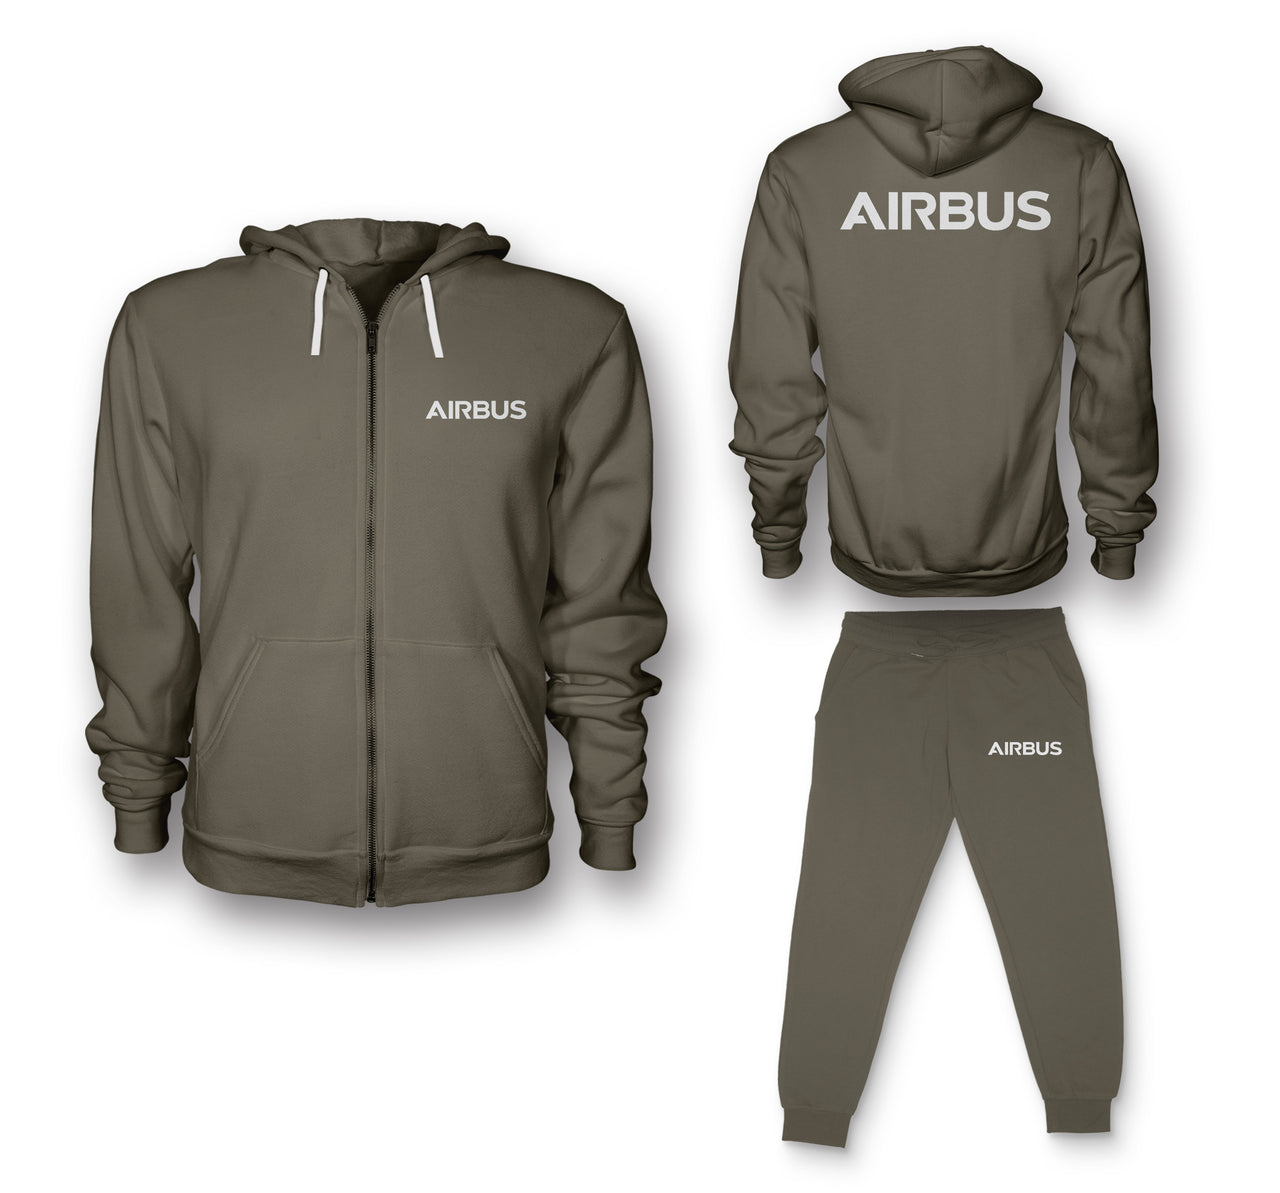 Airbus & Text Designed Zipped Hoodies & Sweatpants Set